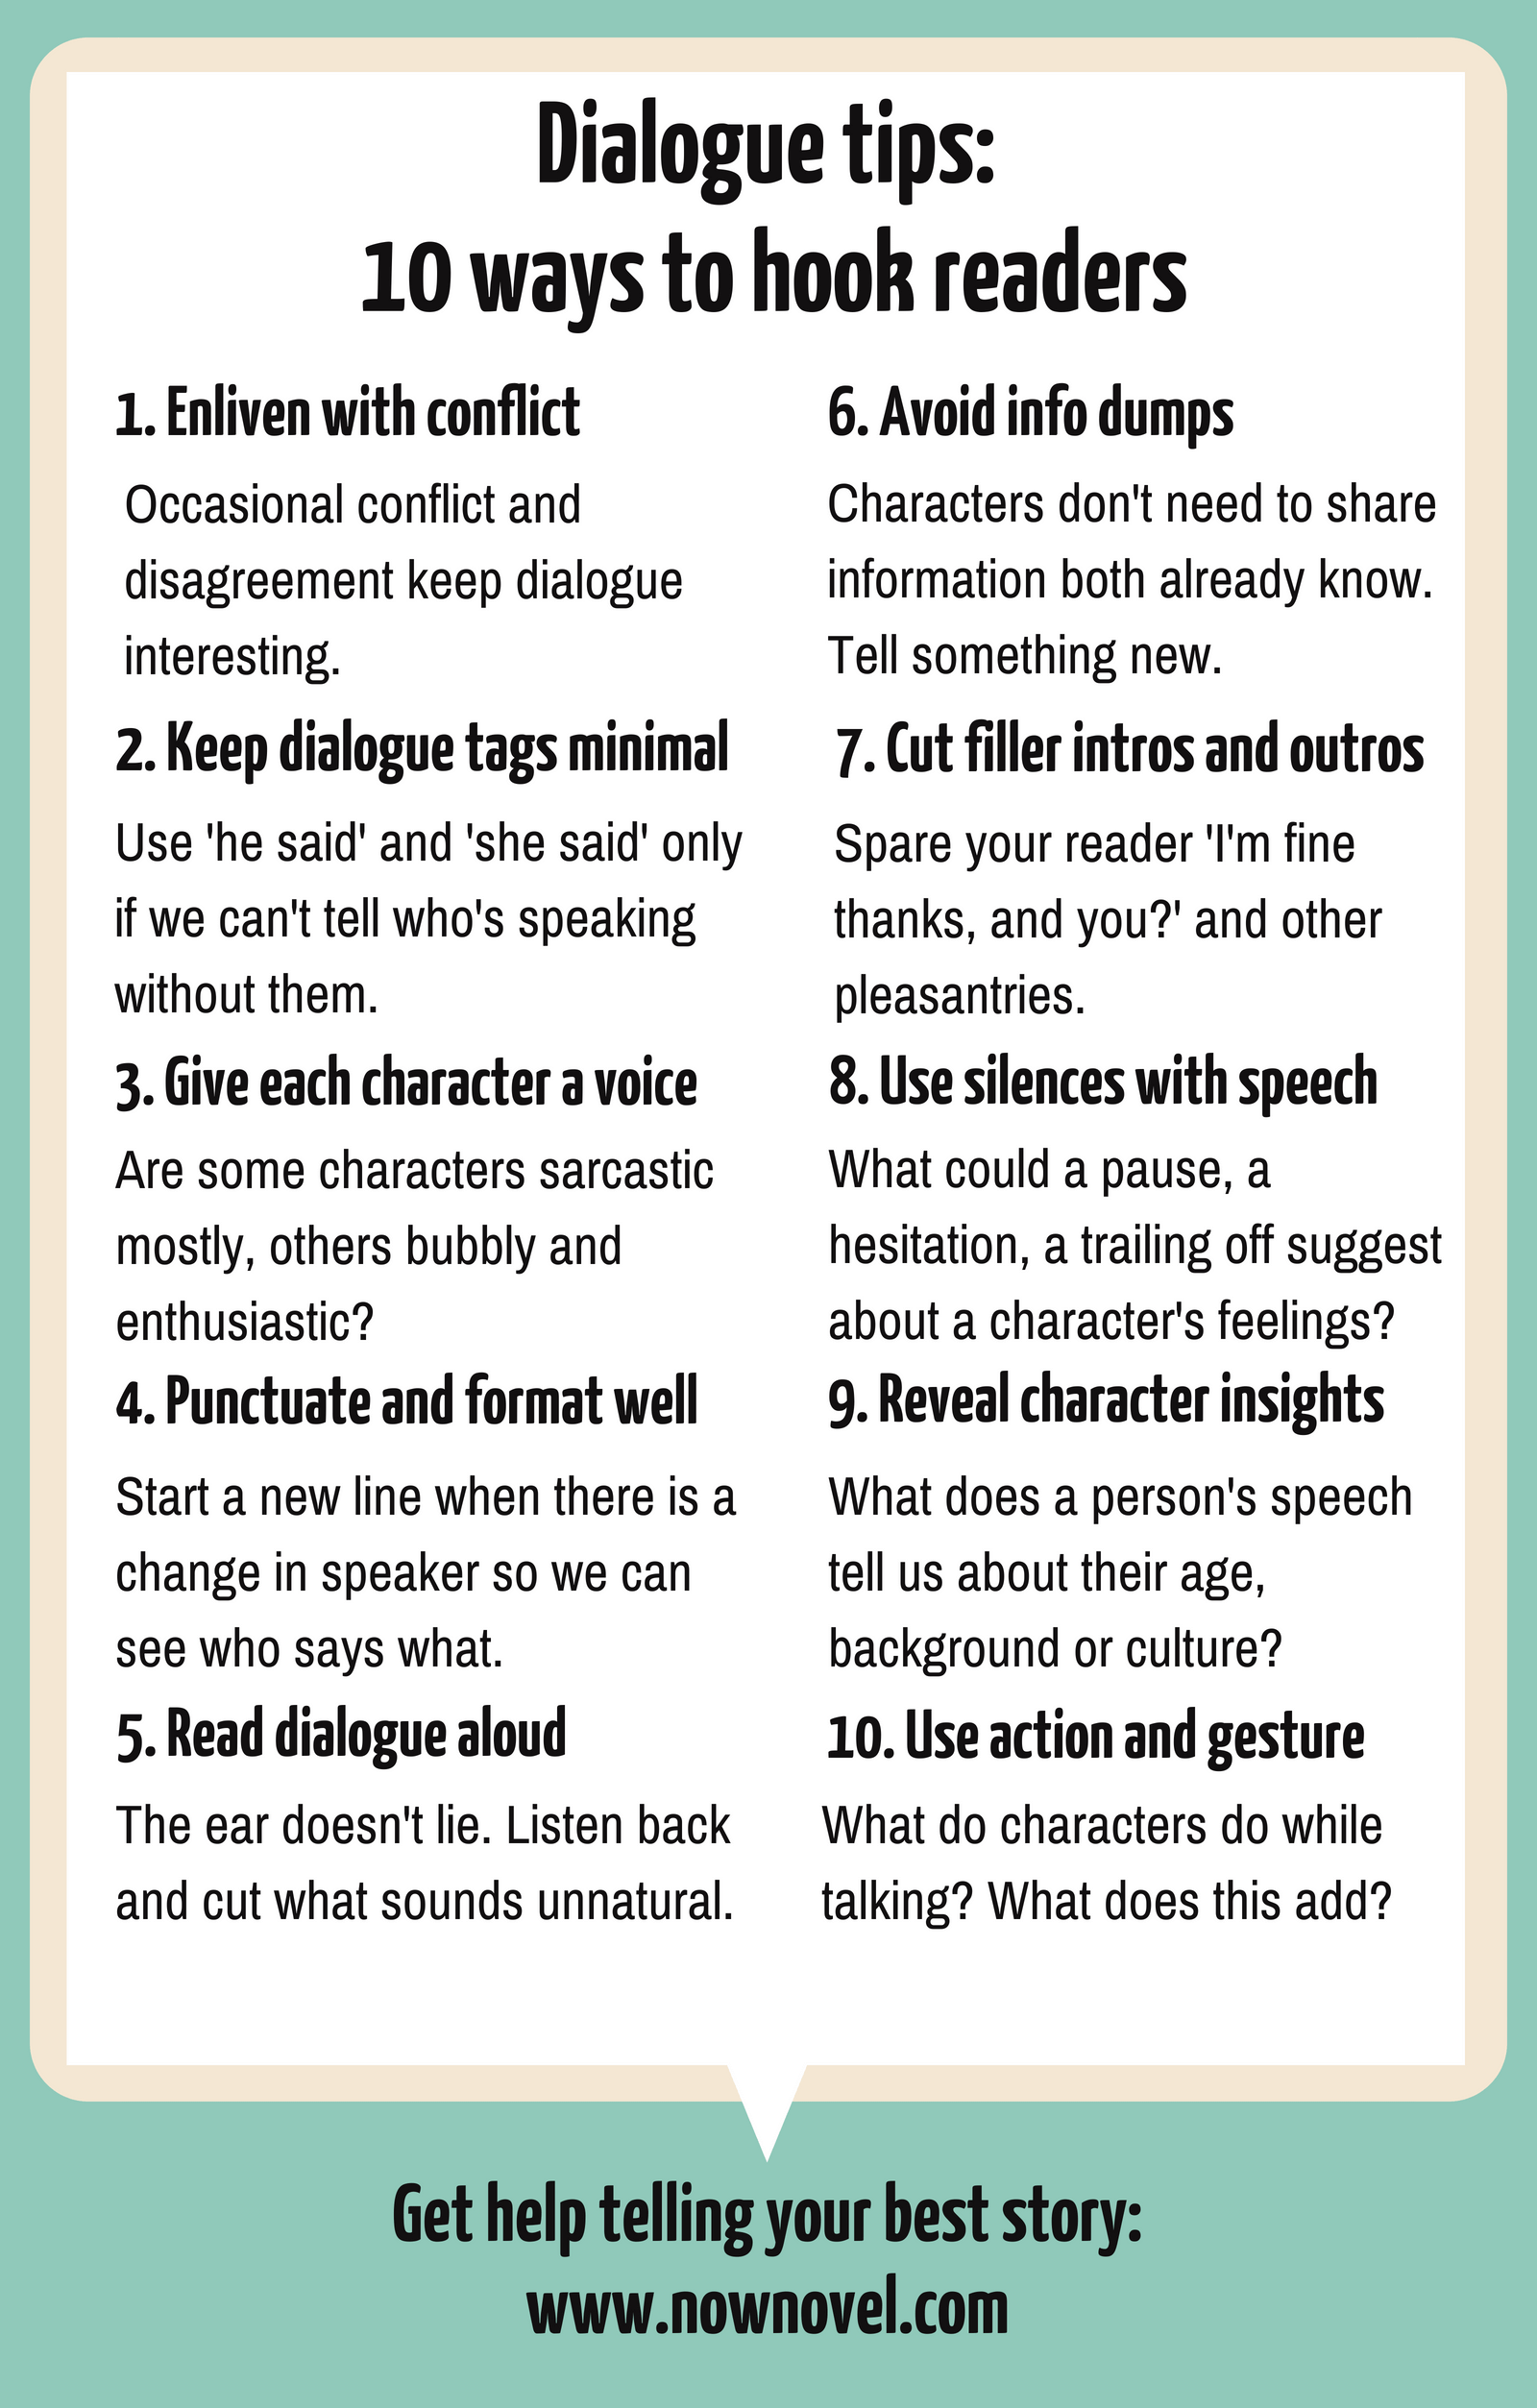 Dialogue tips - infographic | Now Novel